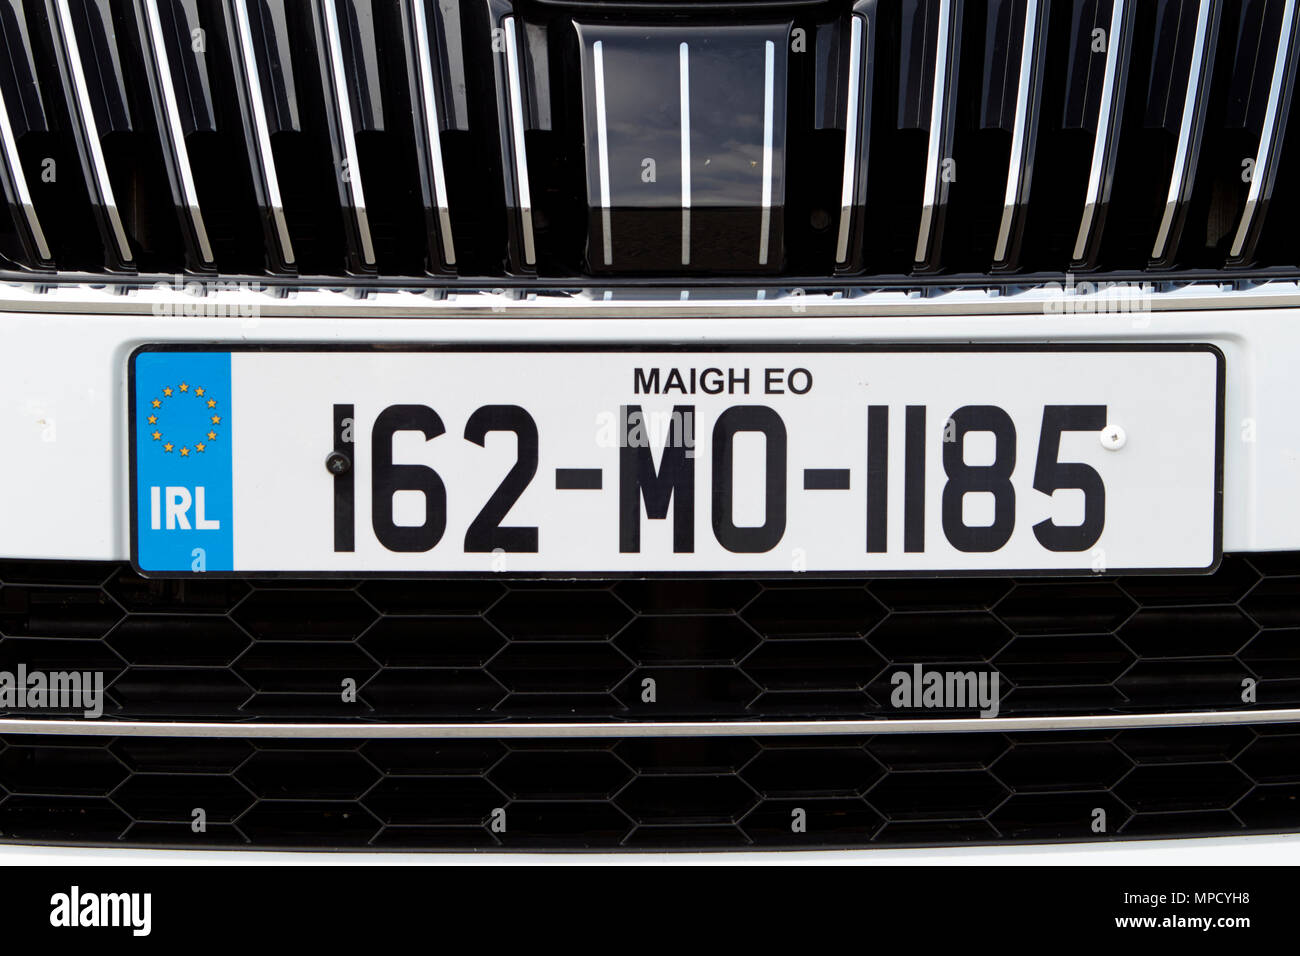 mayo car registration plate in ireland Stock Photo - Alamy